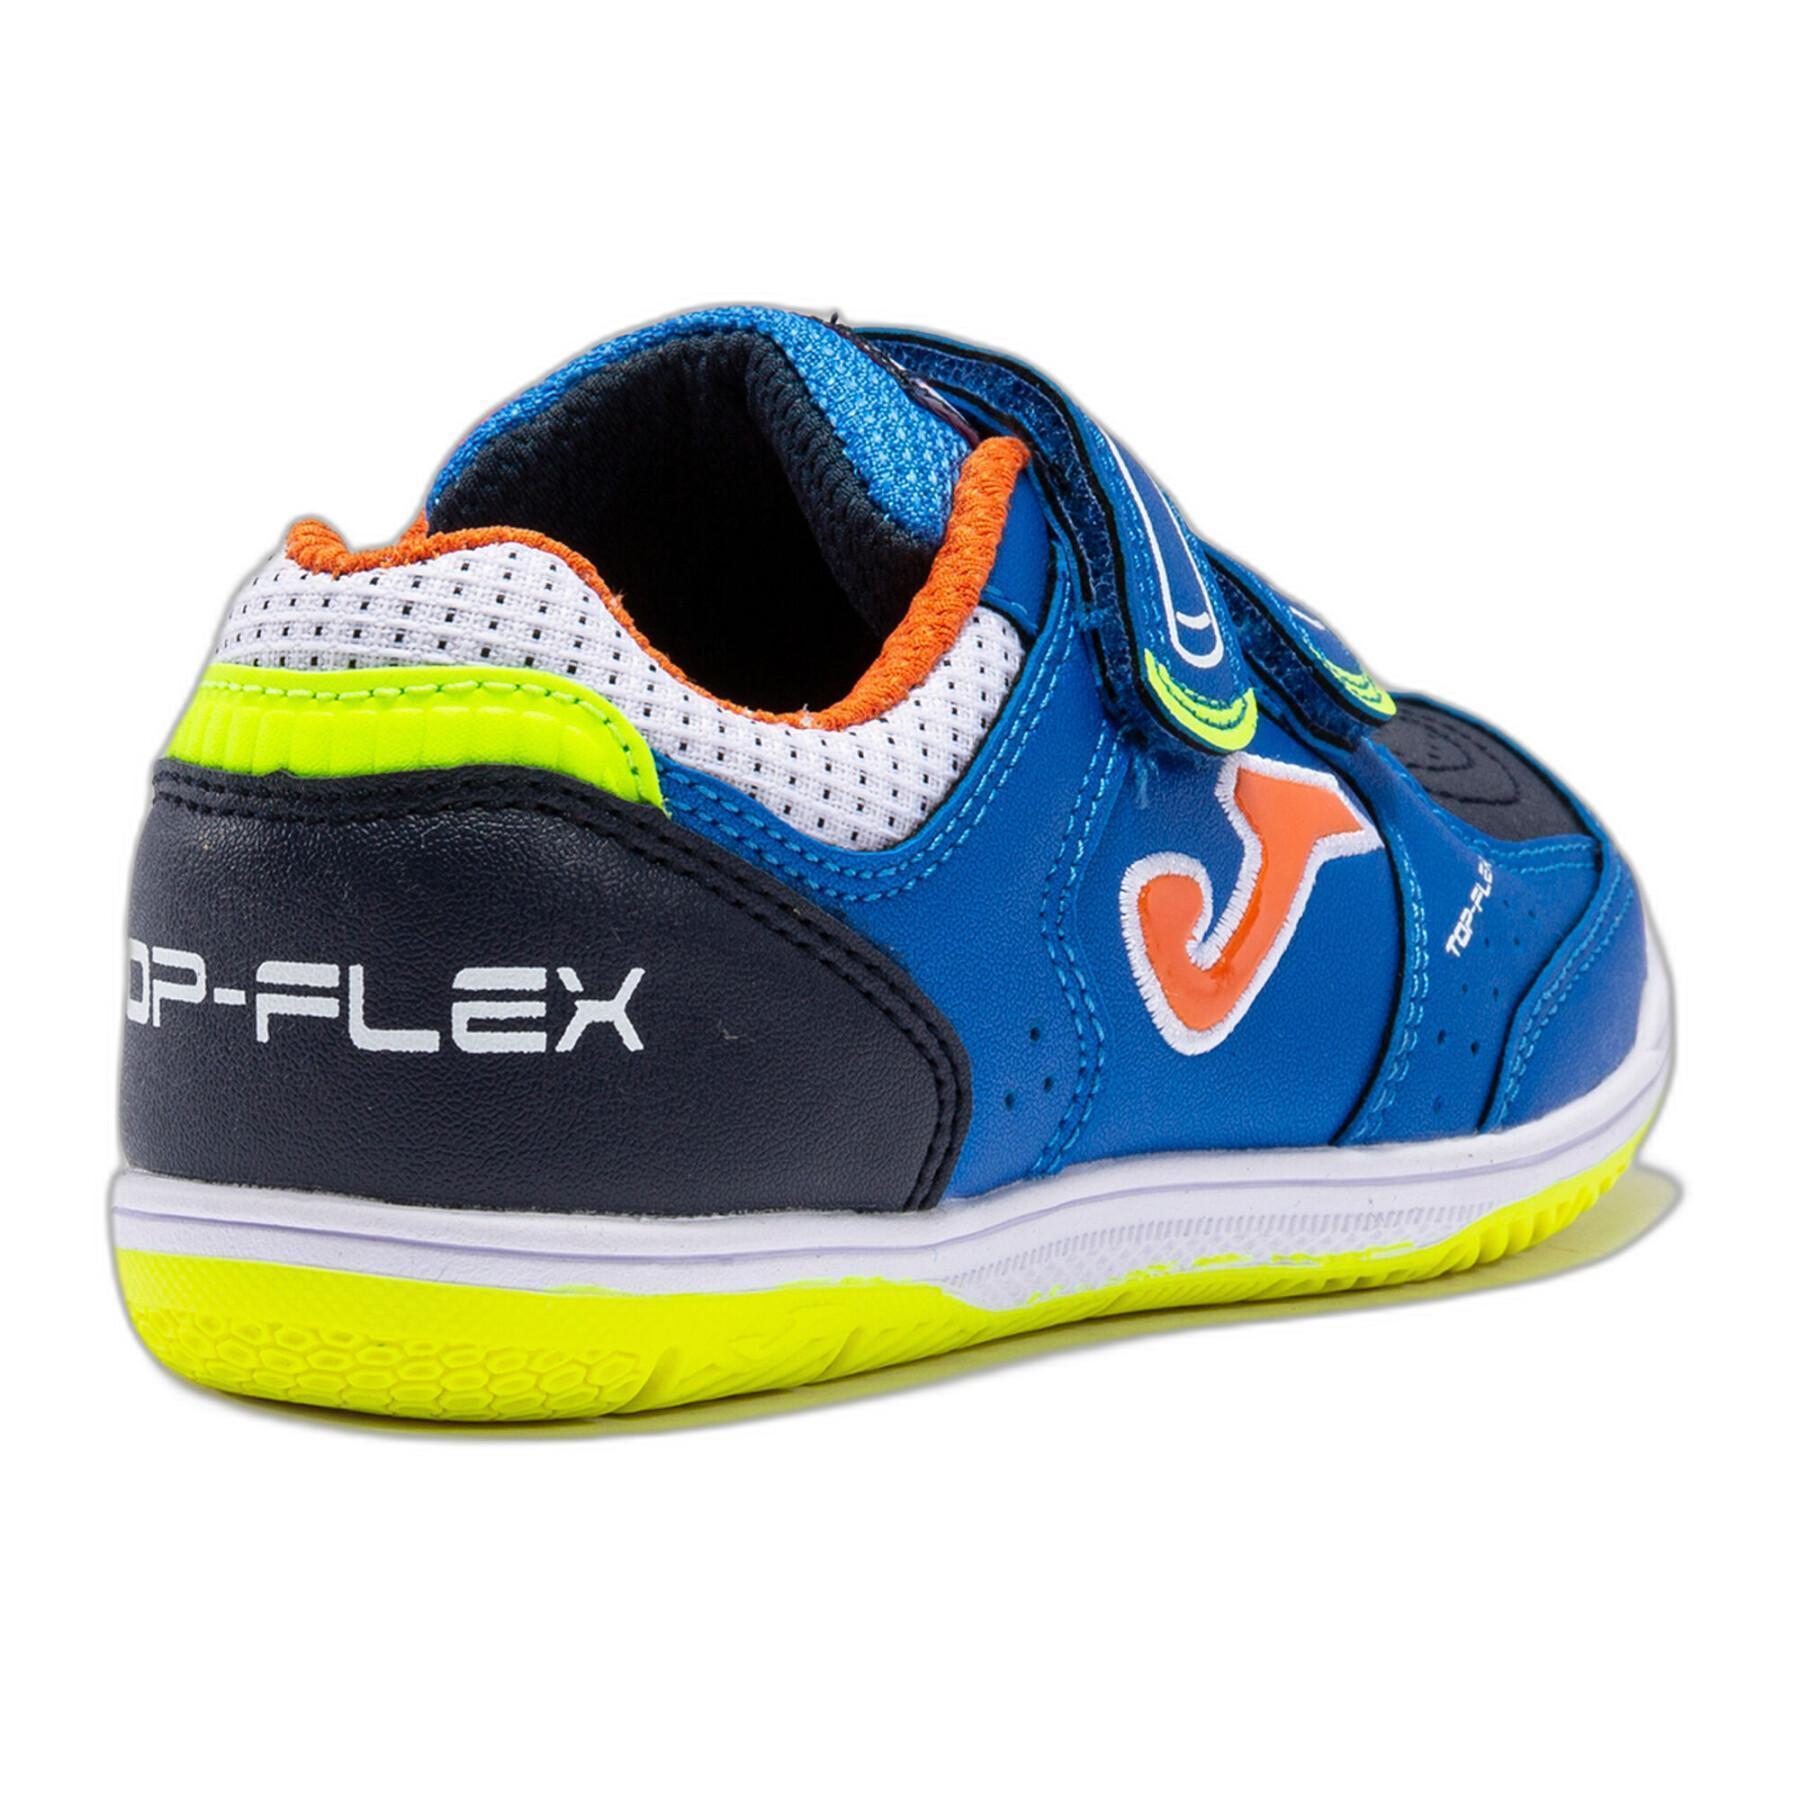 Futsal shoes Joma Top Flex 2204